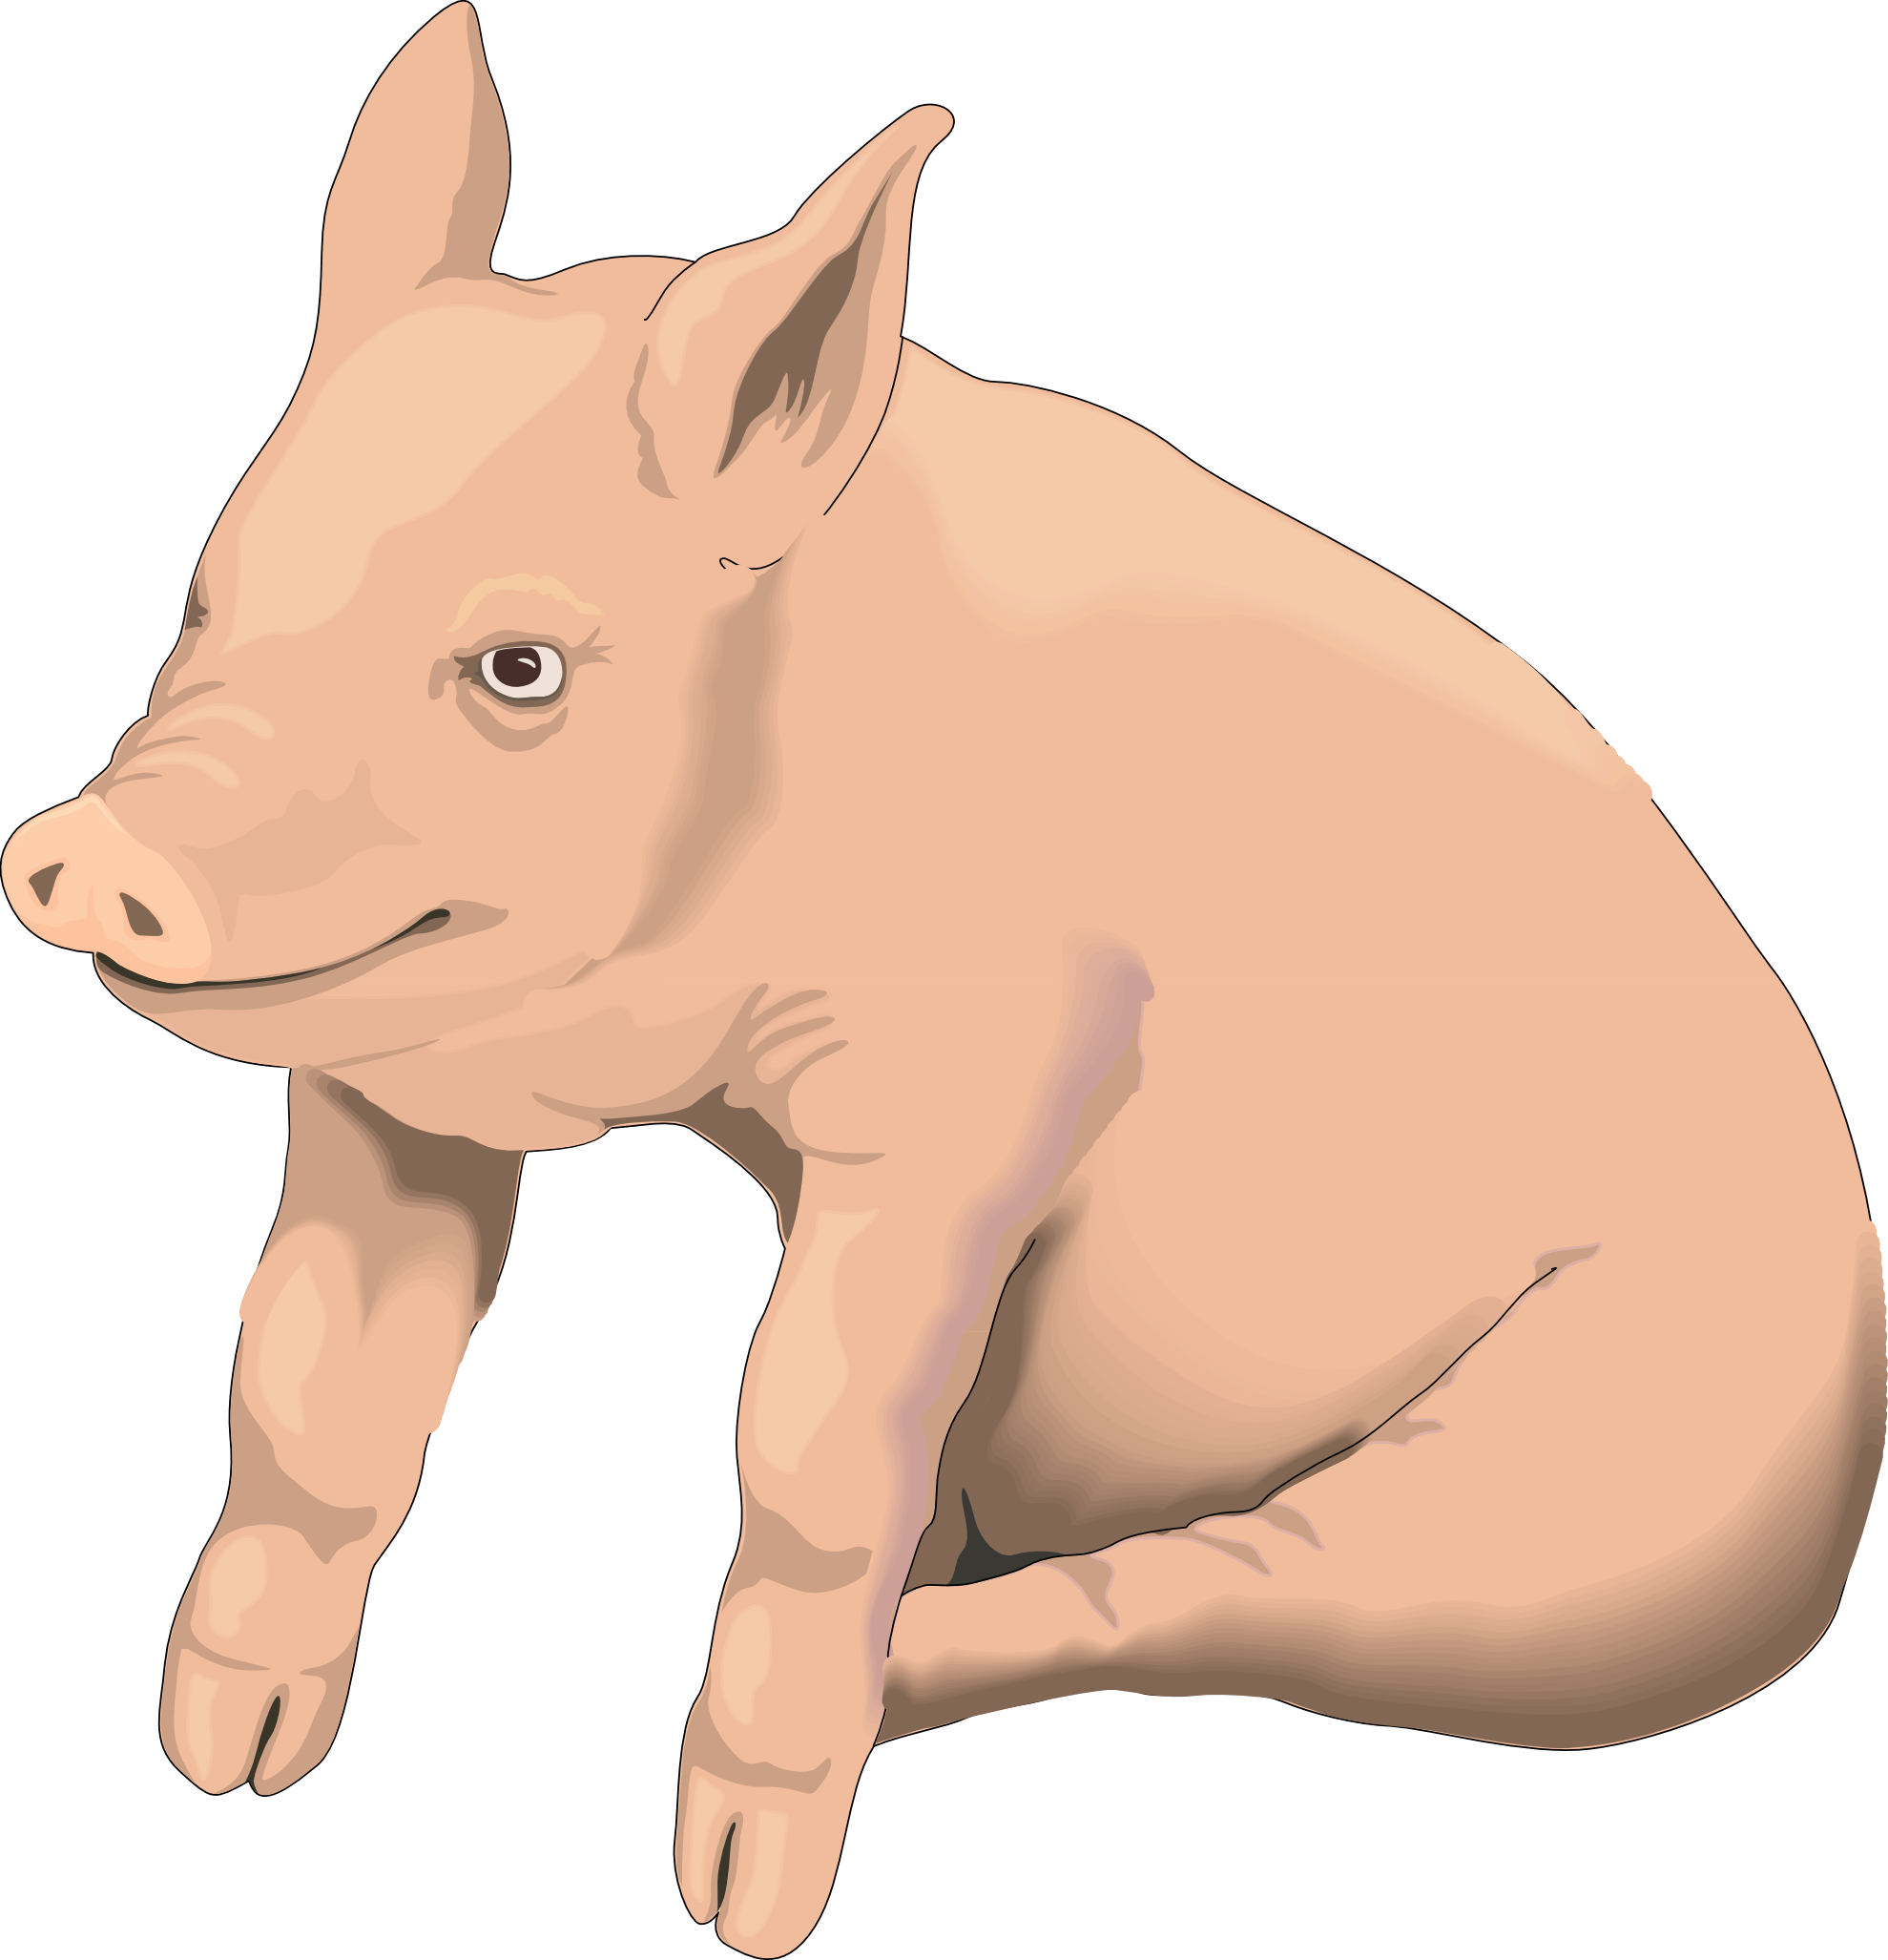 Pig clipart transparent